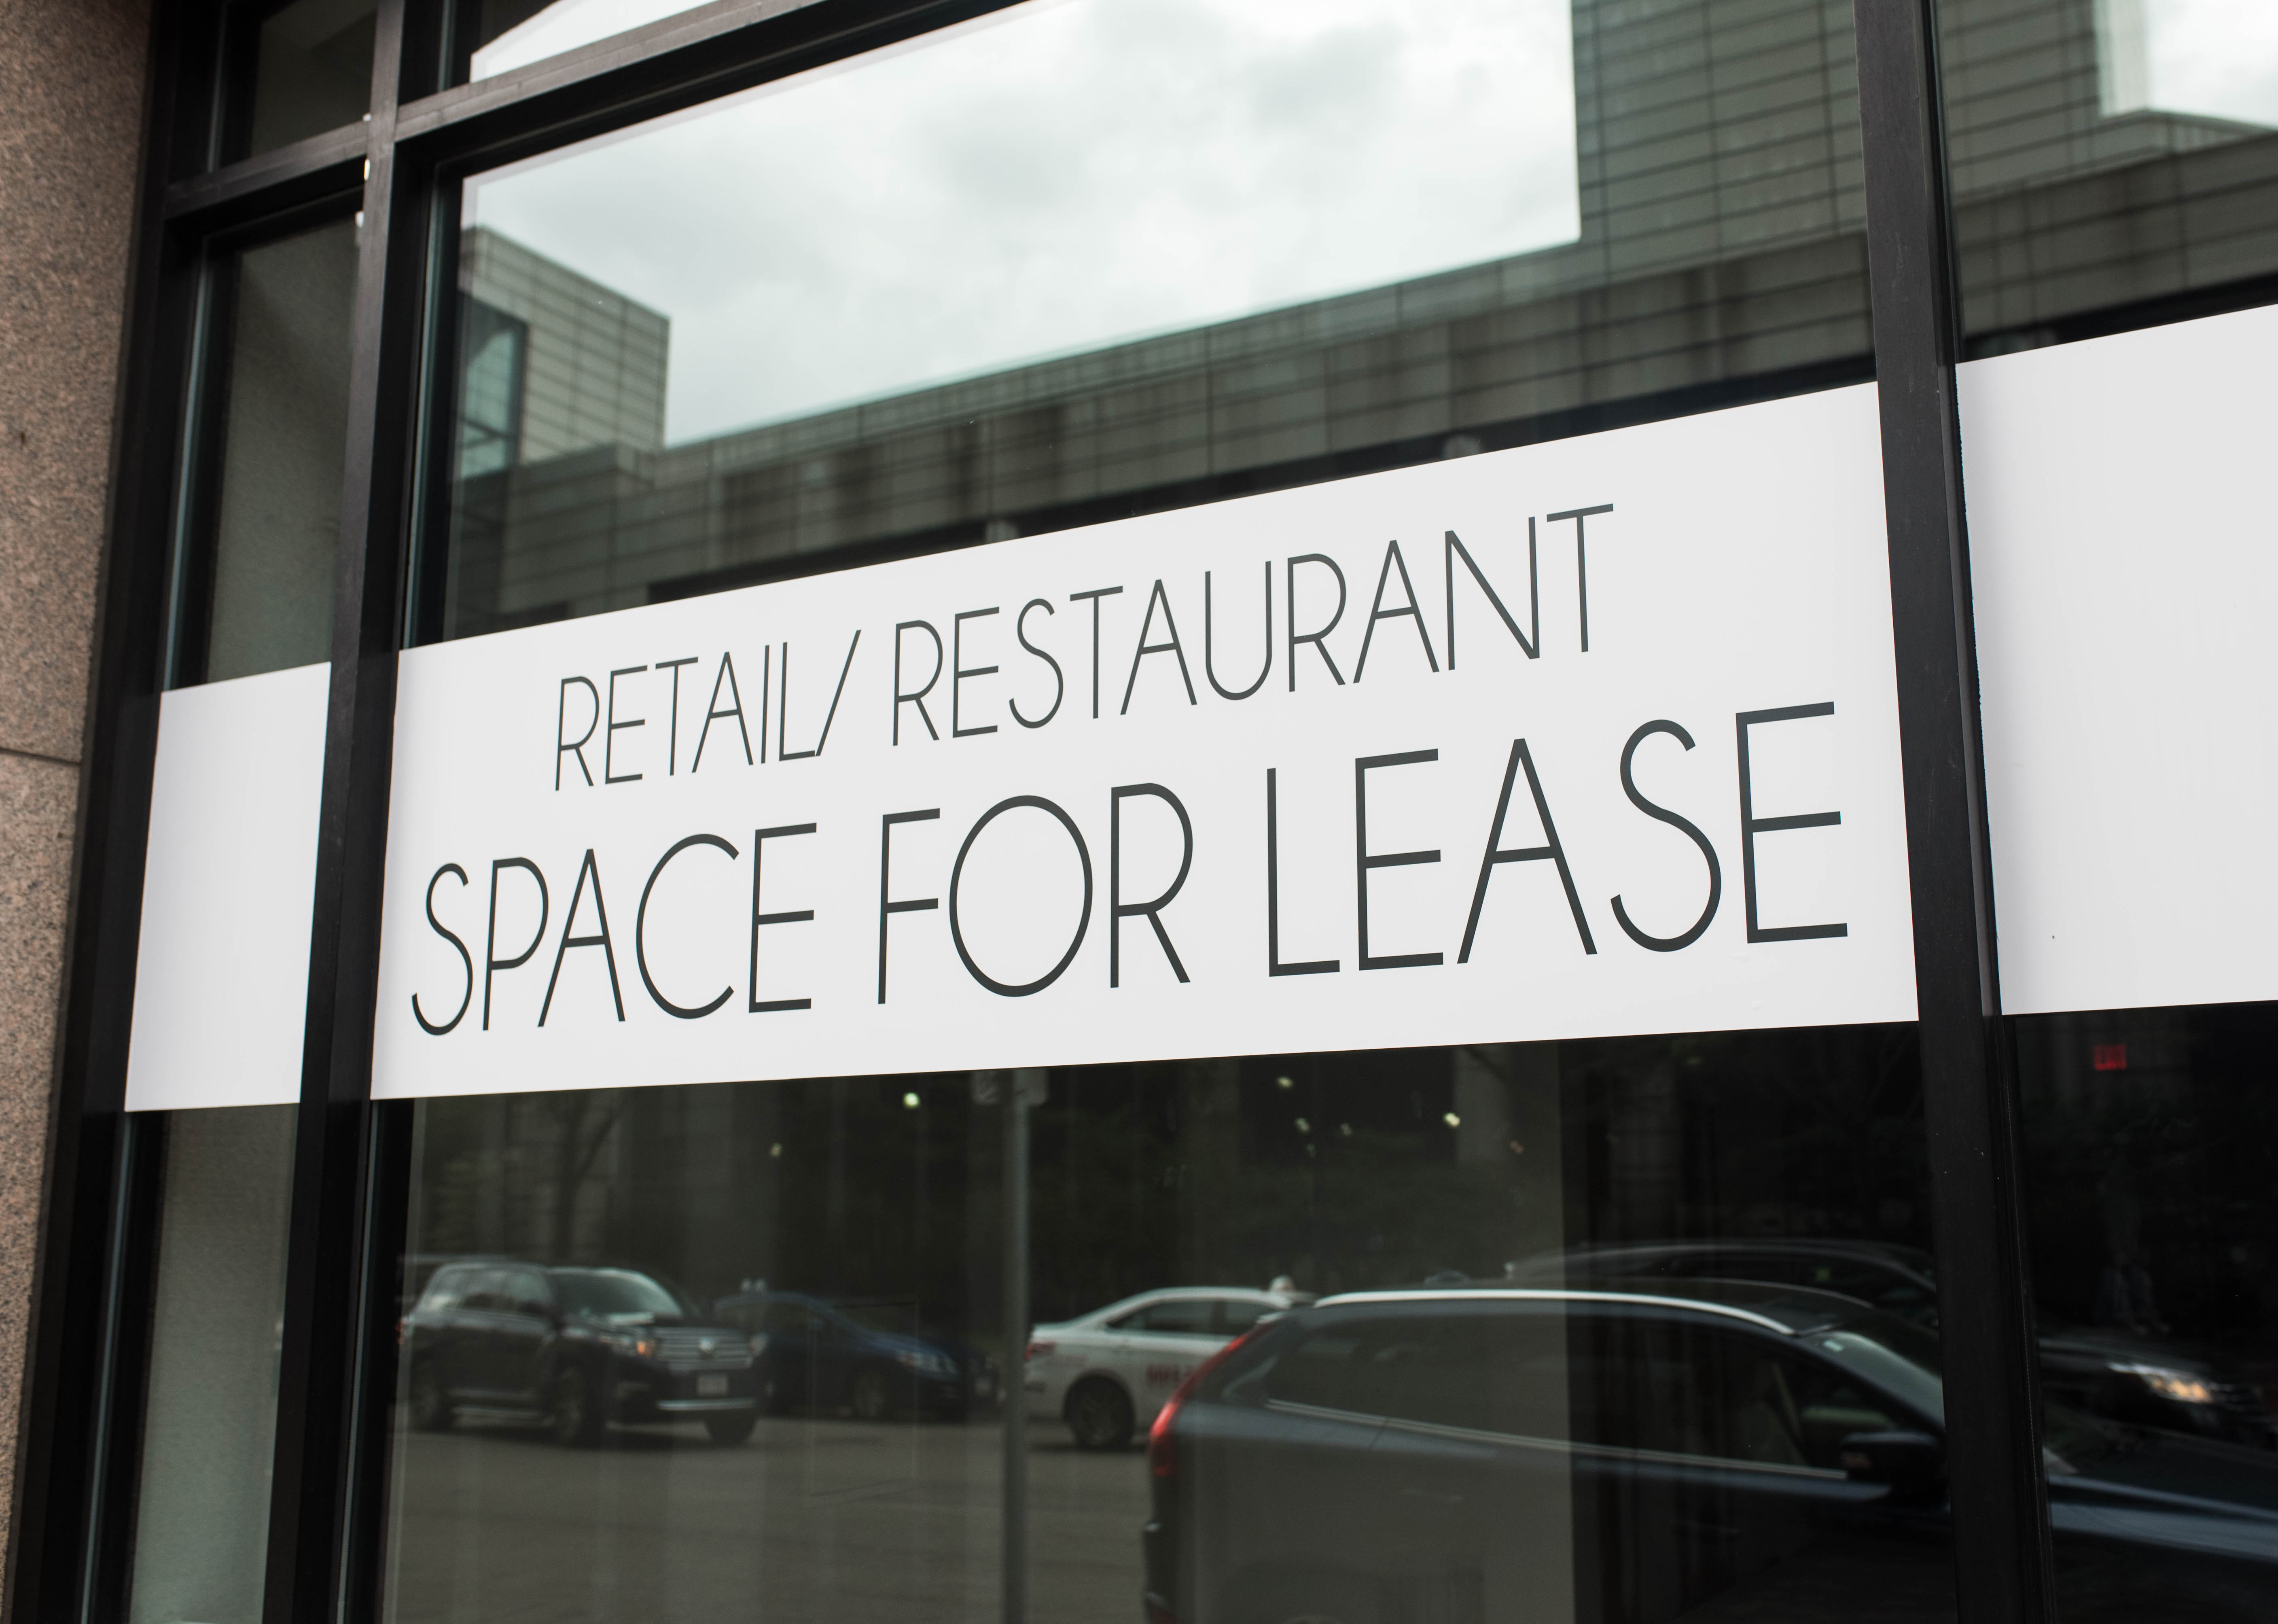 Real Estate Signage for Restaurant Leasing